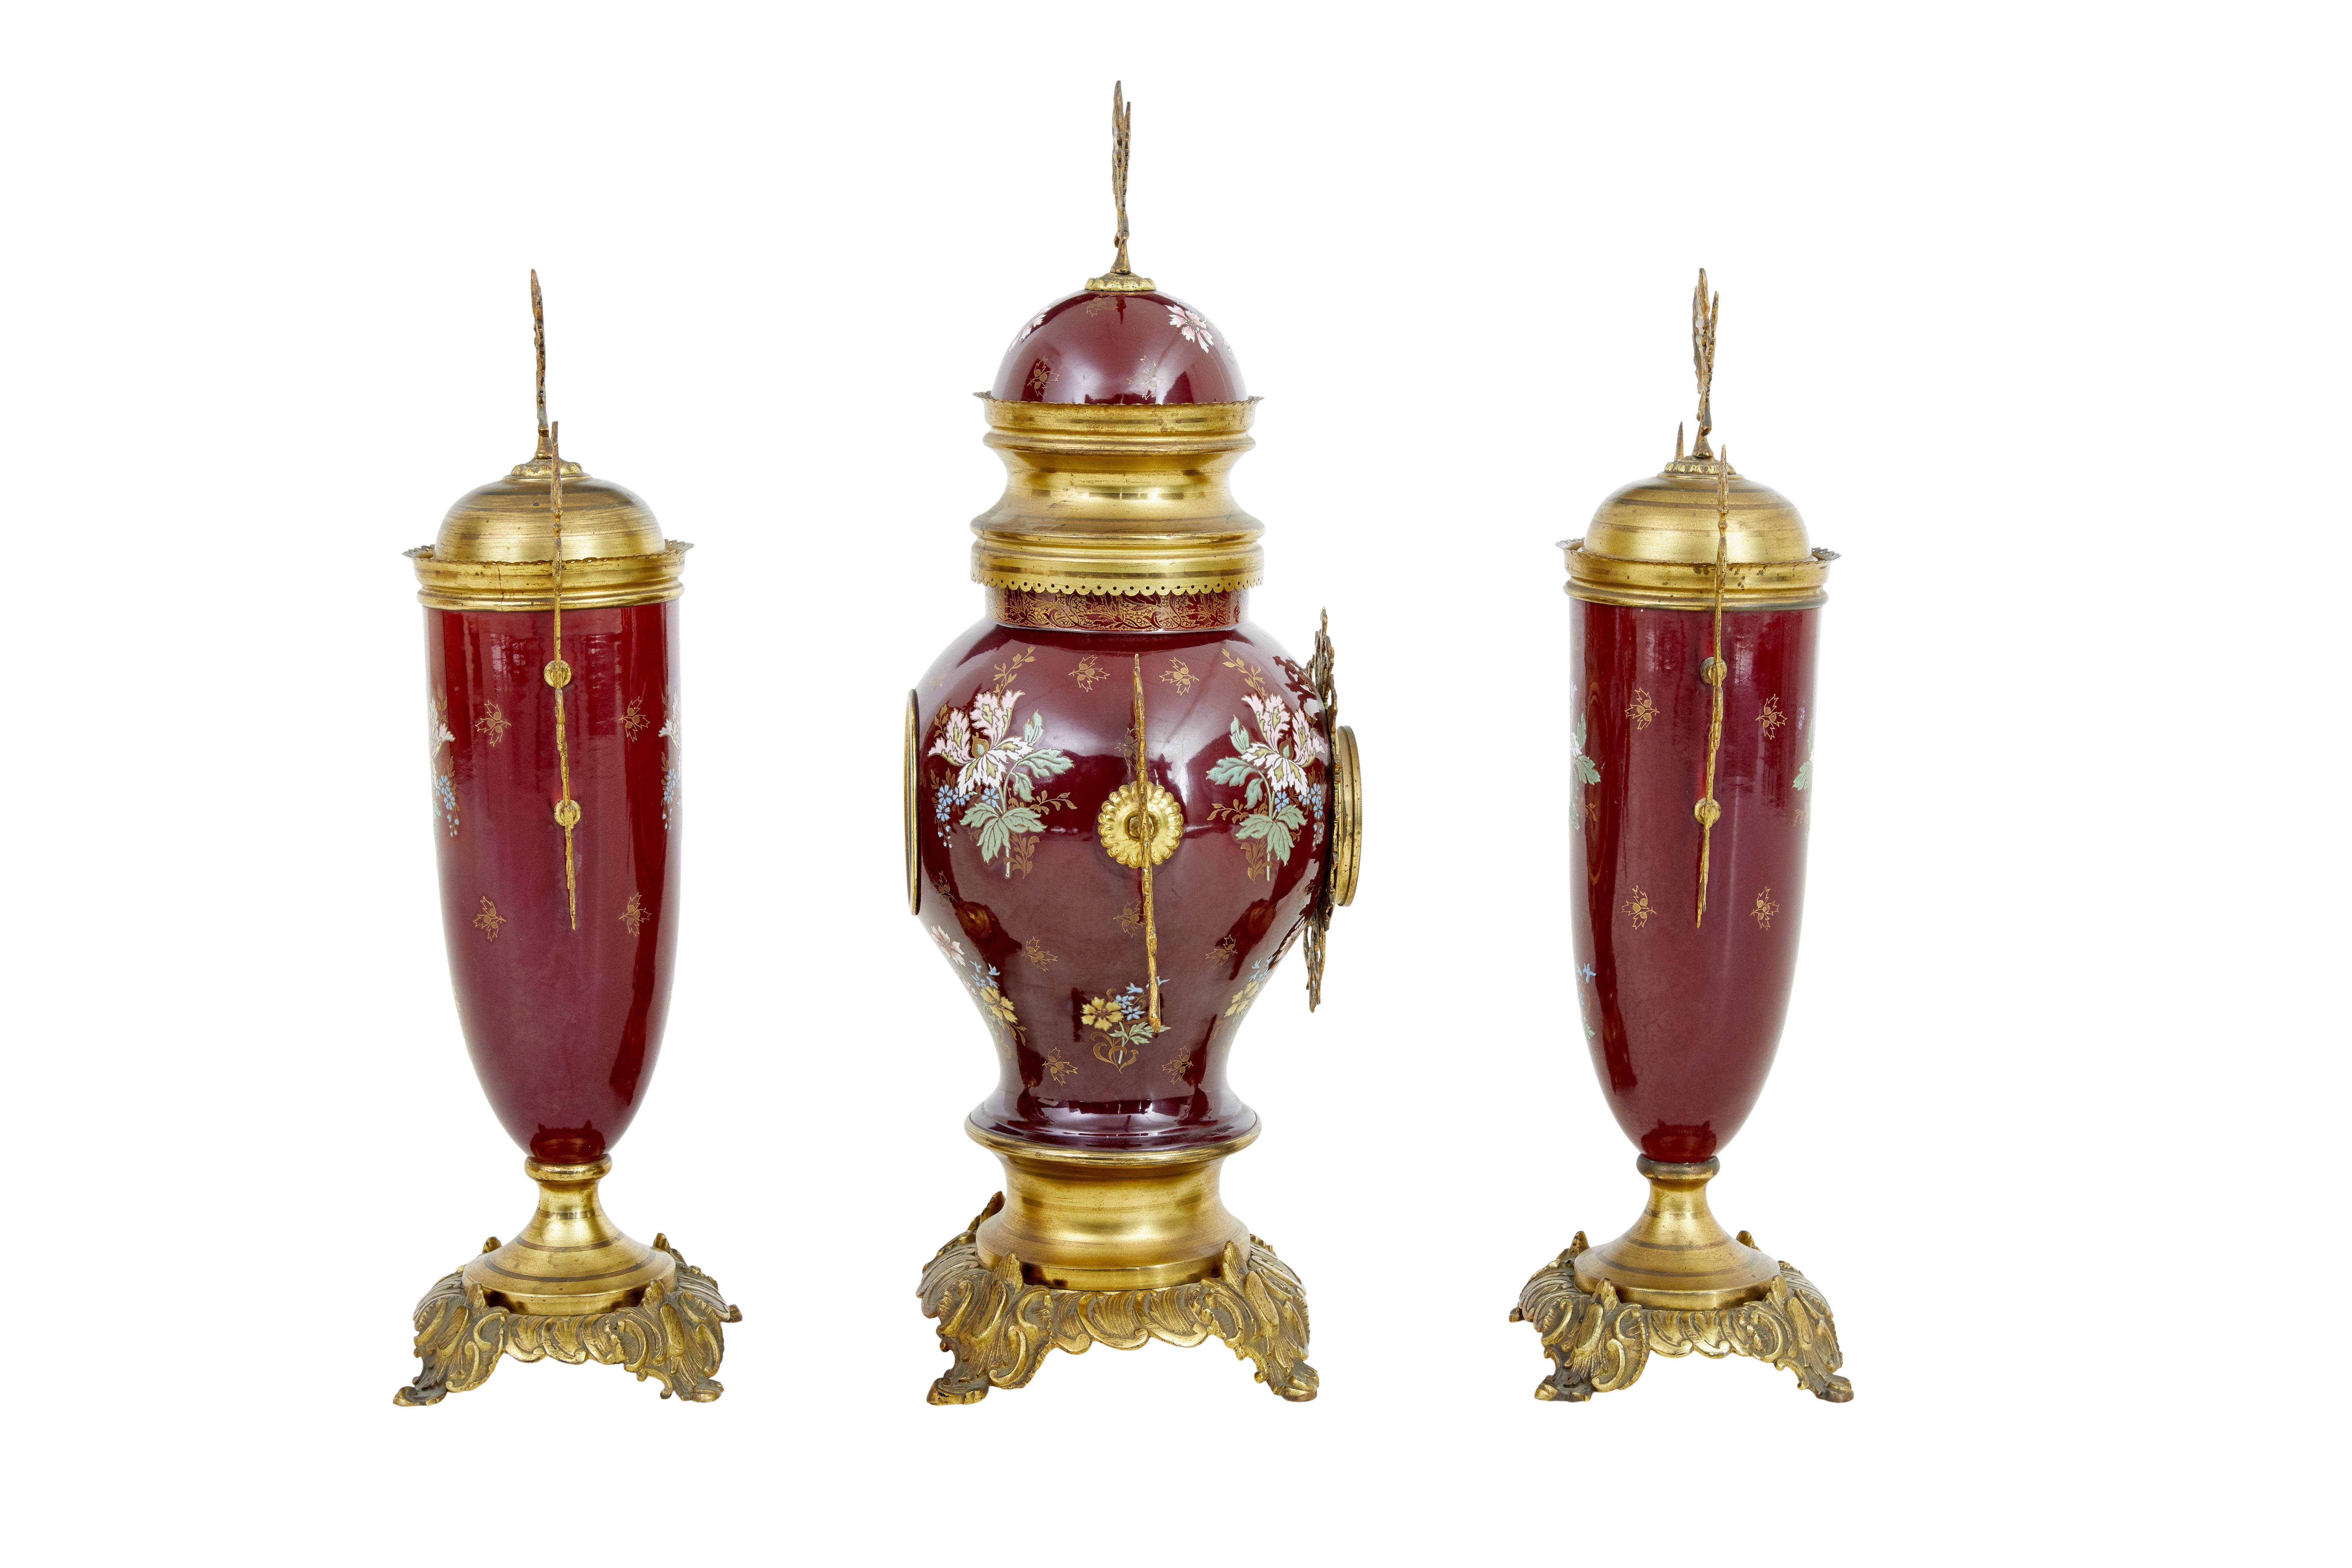 Metalwork 19th century French decorative toleware garniture set For Sale